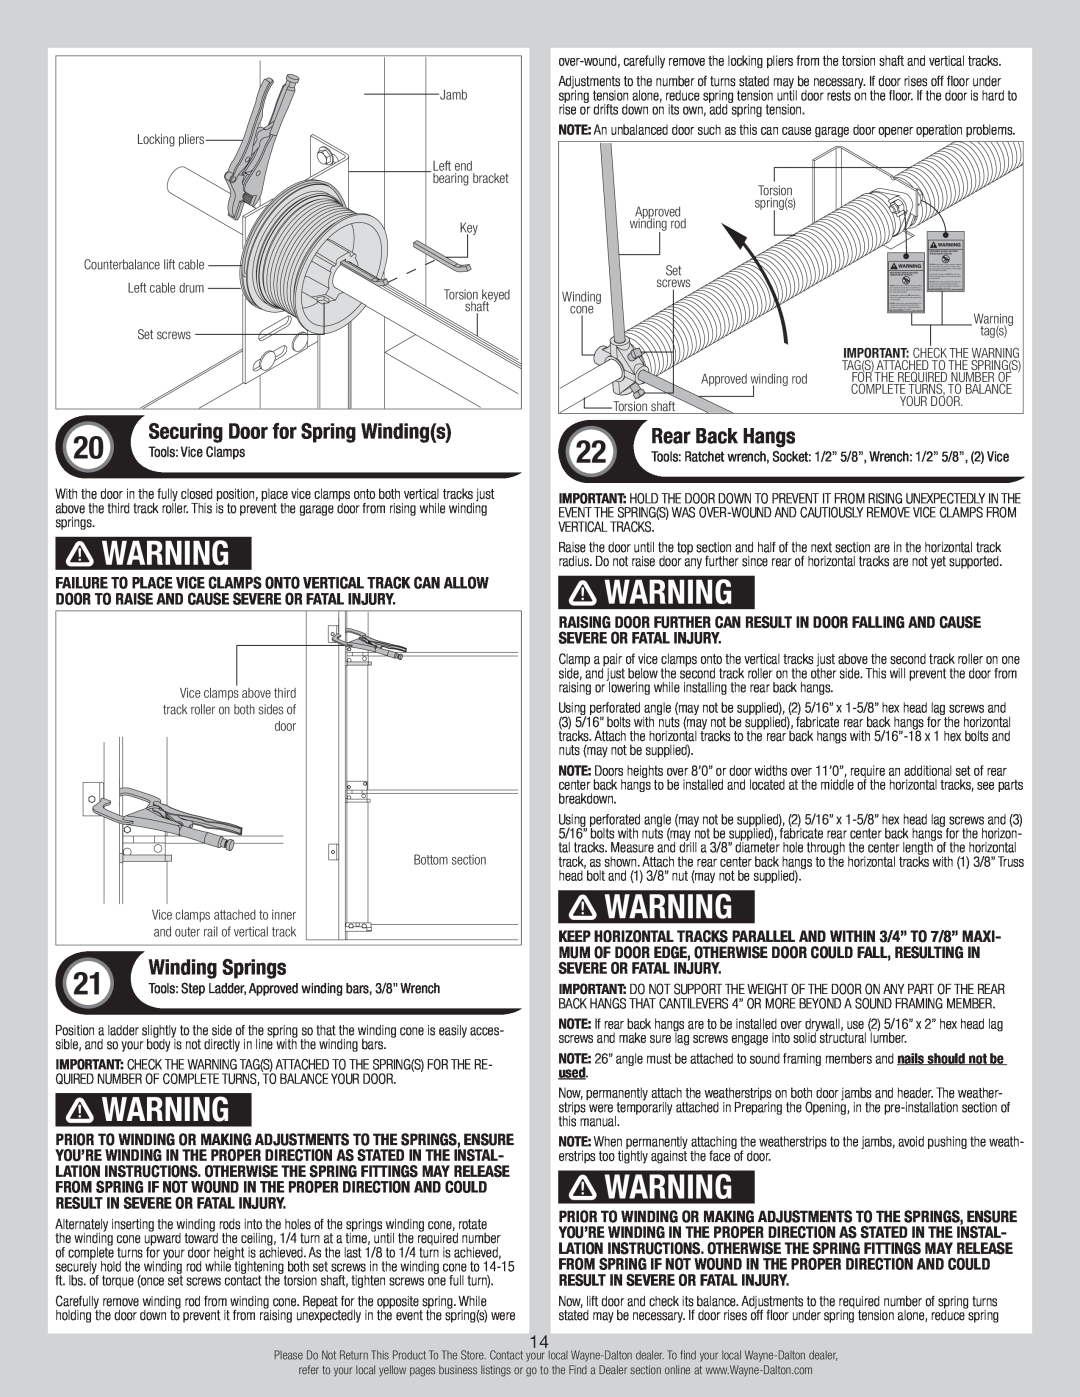 Wayne-Dalton 7100 Series installation instructions Rear Back Hangs, Winding Springs, Securing Door for Spring Windings 